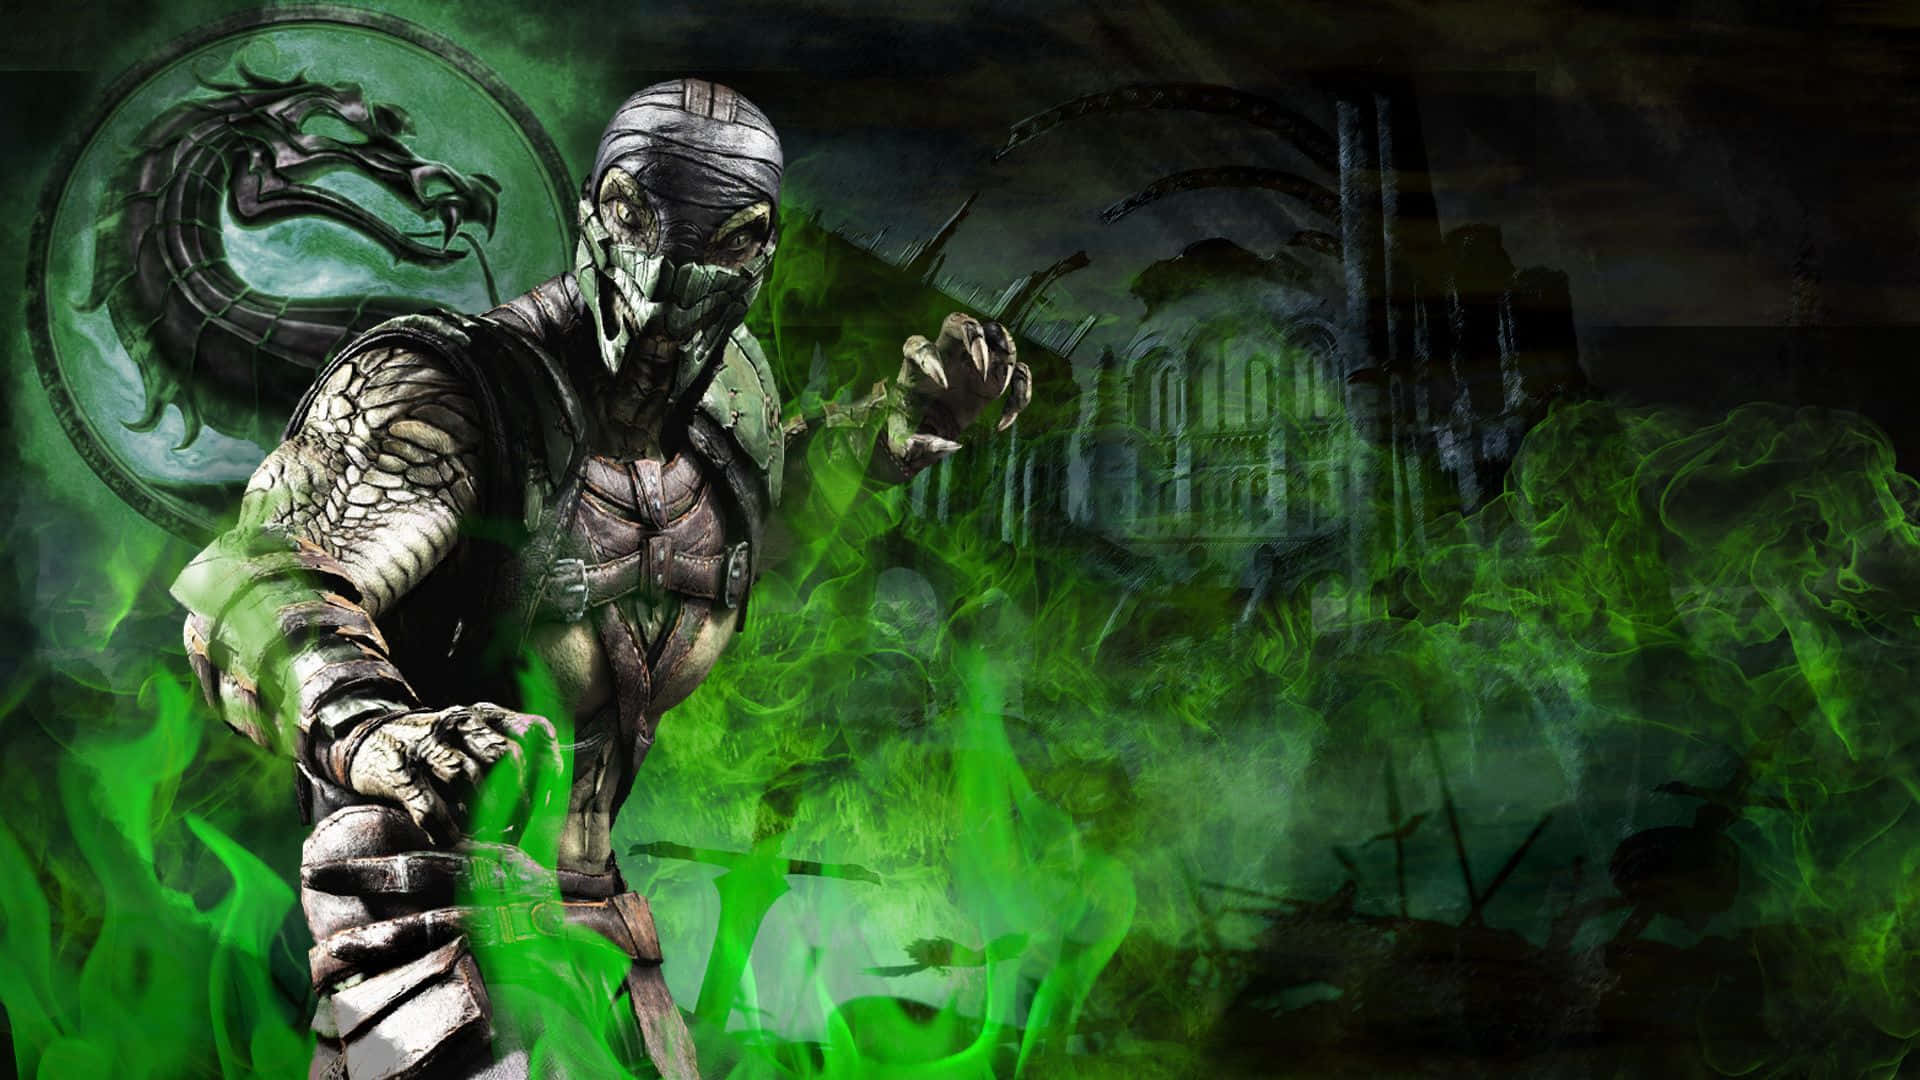 Mortal Kombat Reptile in Iconic Green Stance Wallpaper